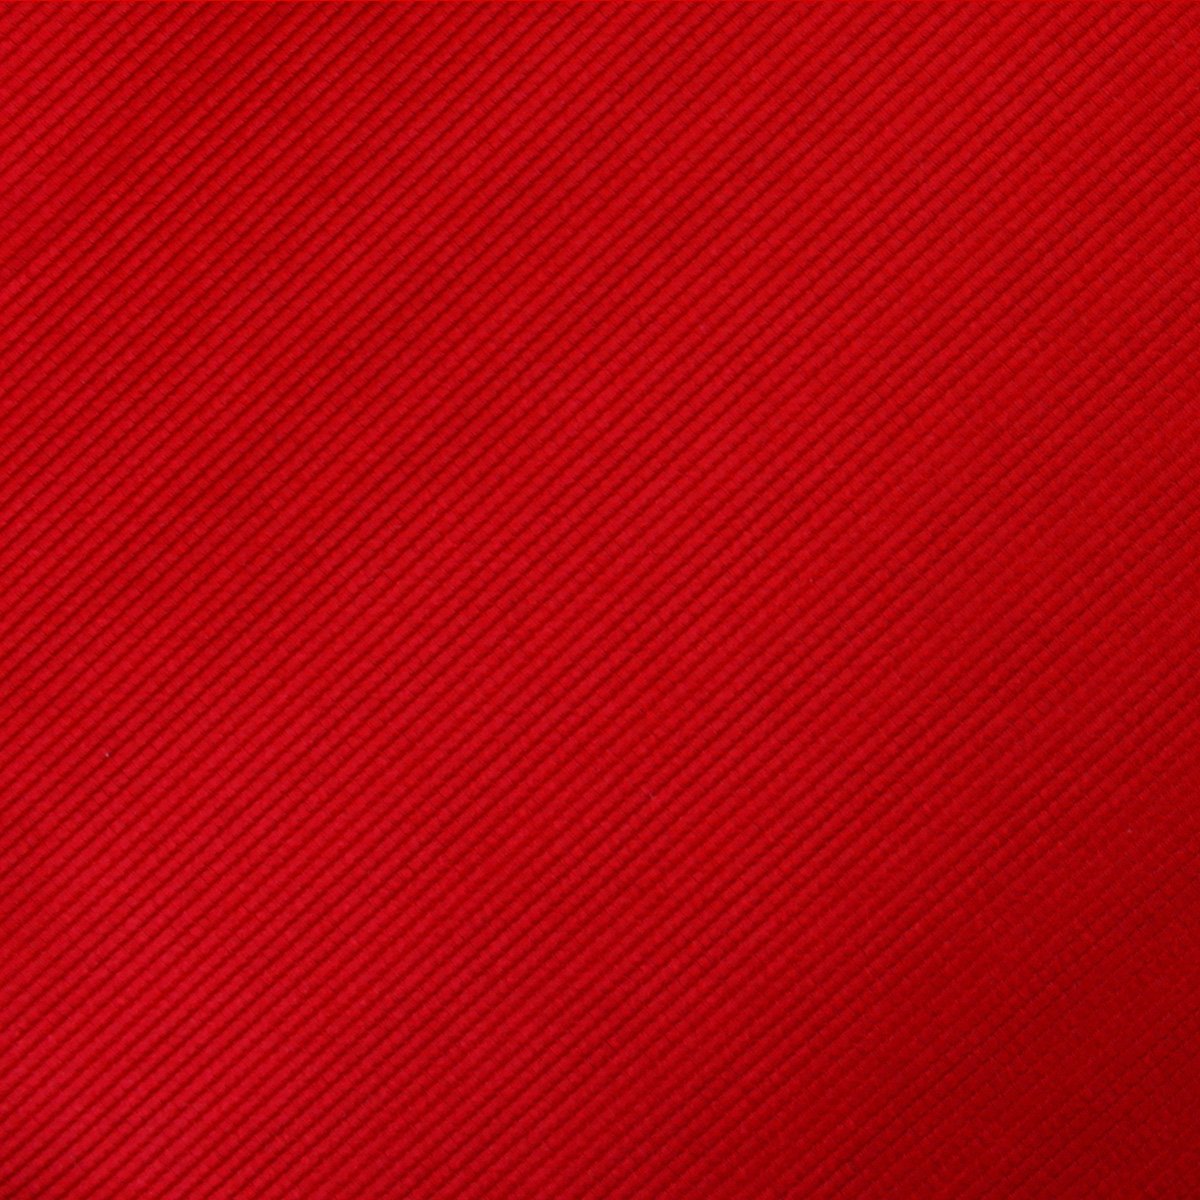 Red Cherry Twill Skinny Tie Fabric